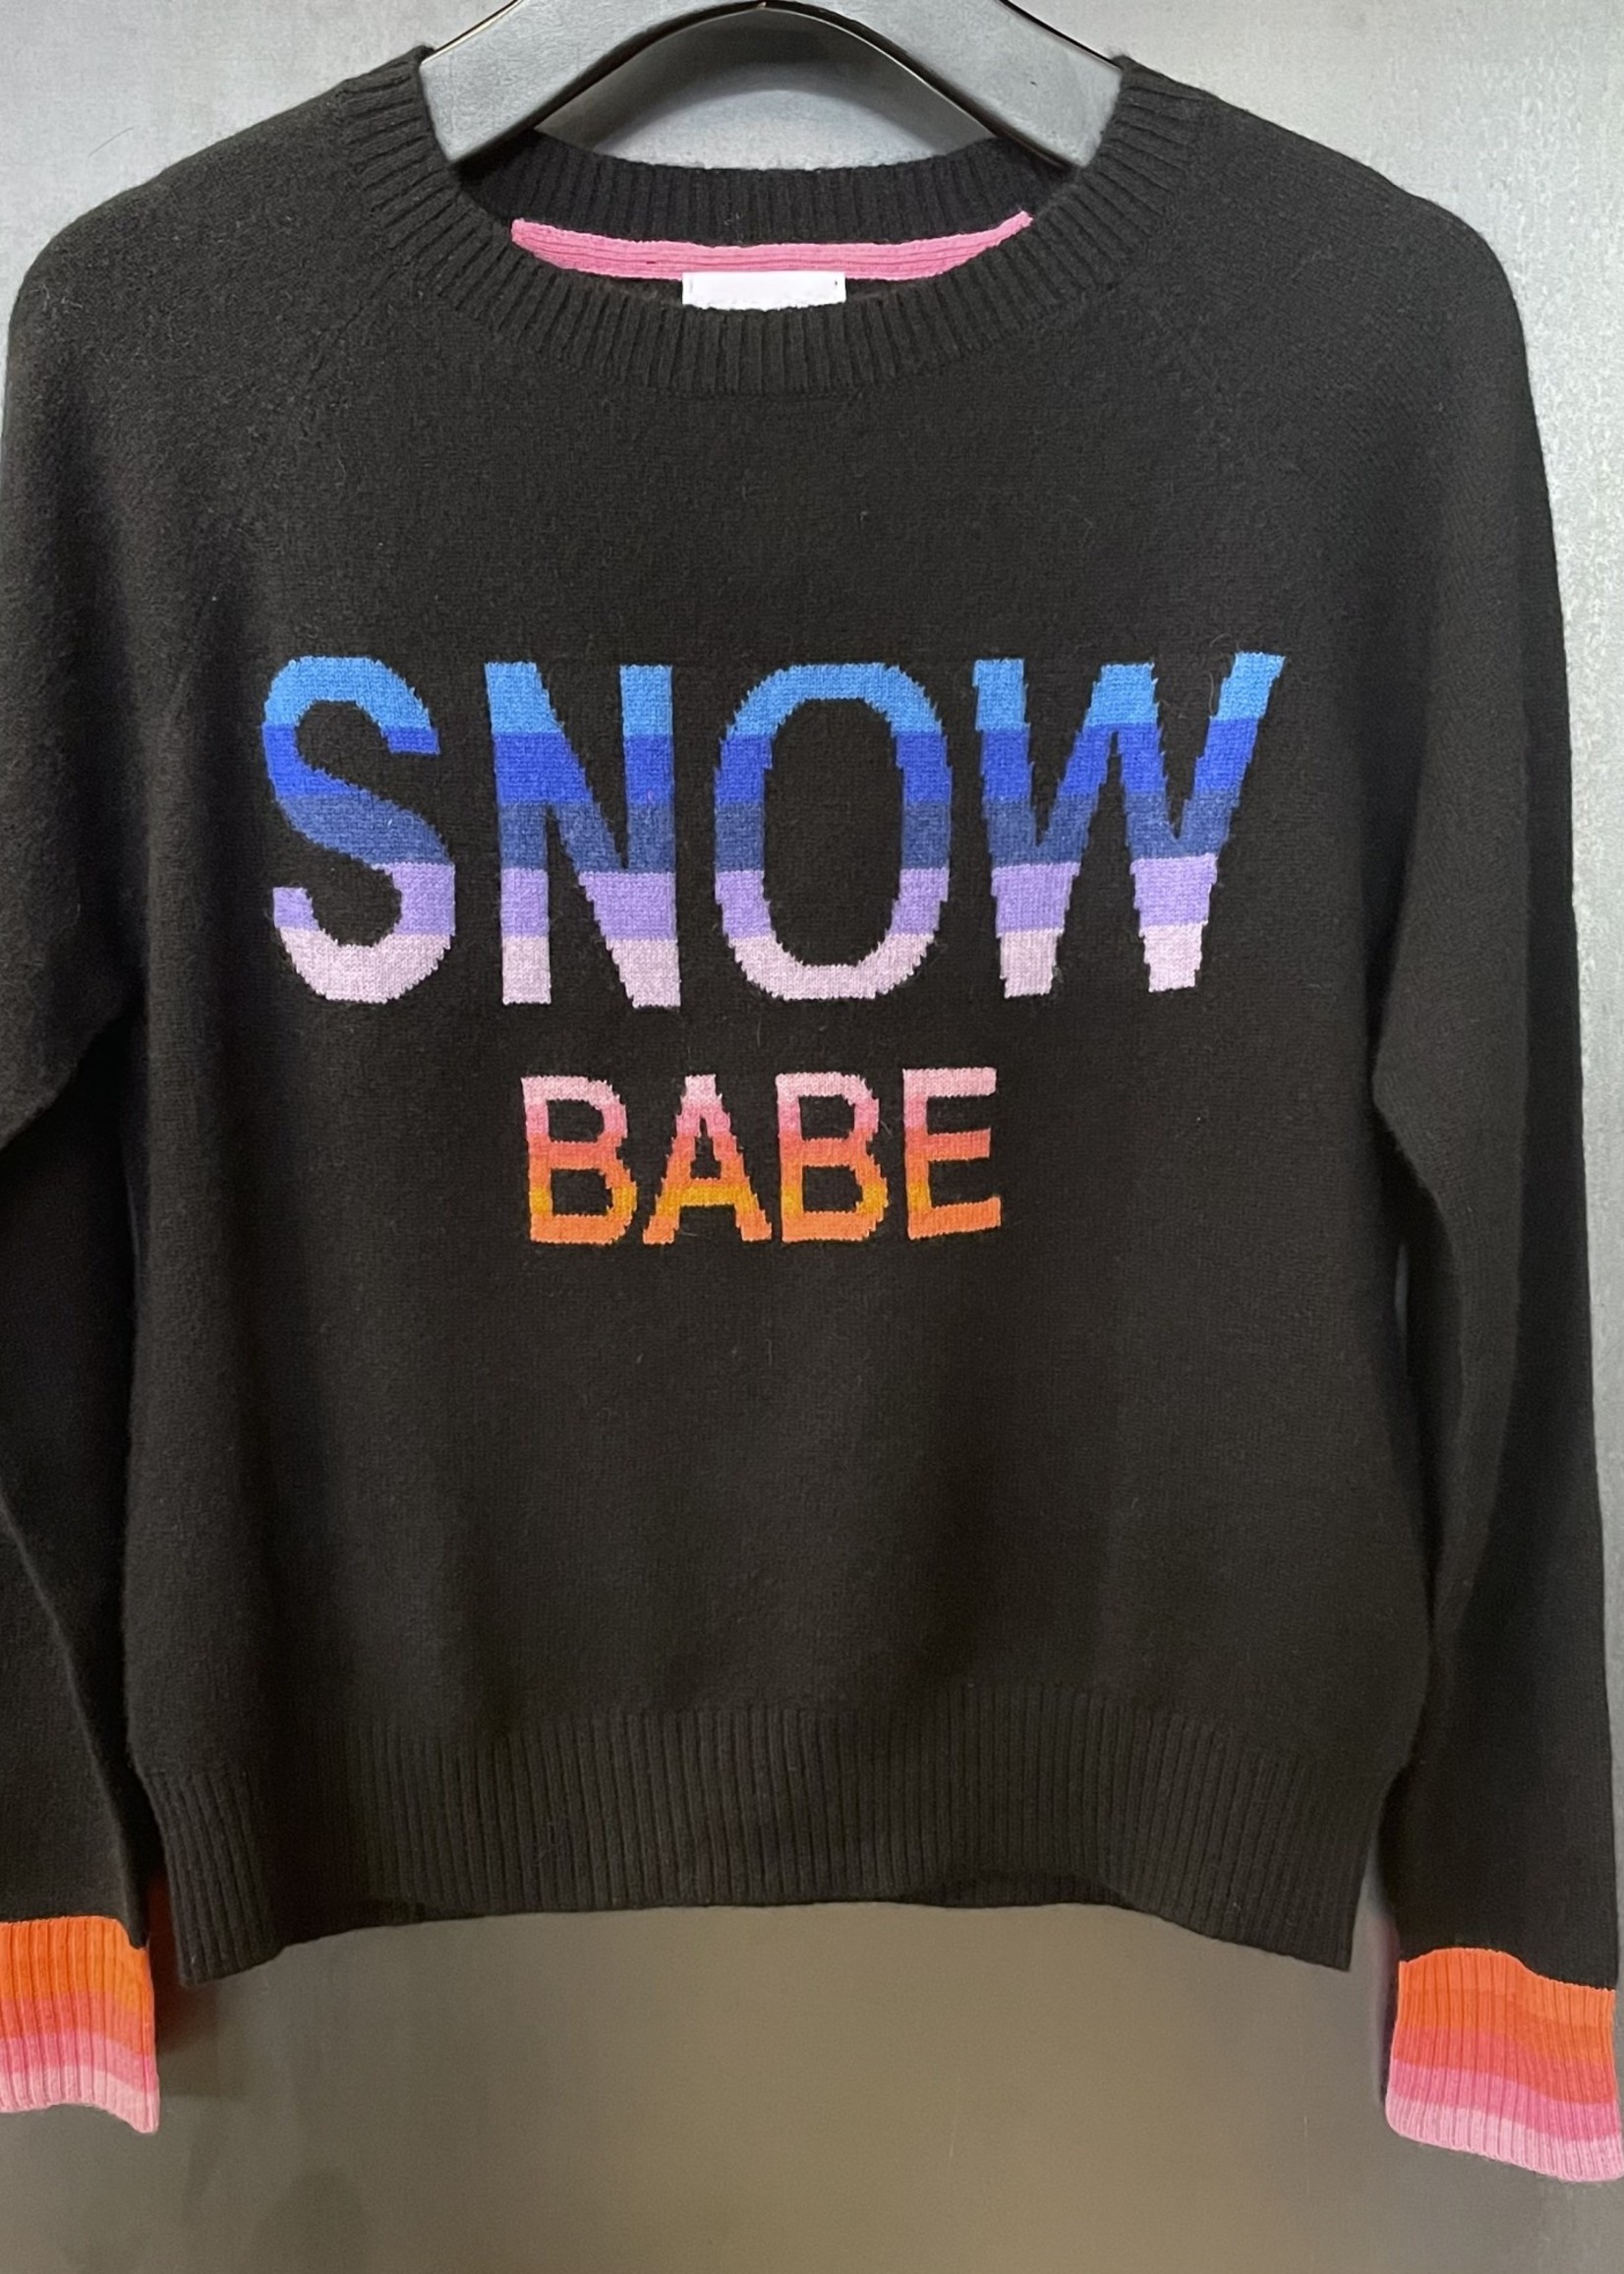 Brodie Cashmere Brodie Snow Babe Sweater